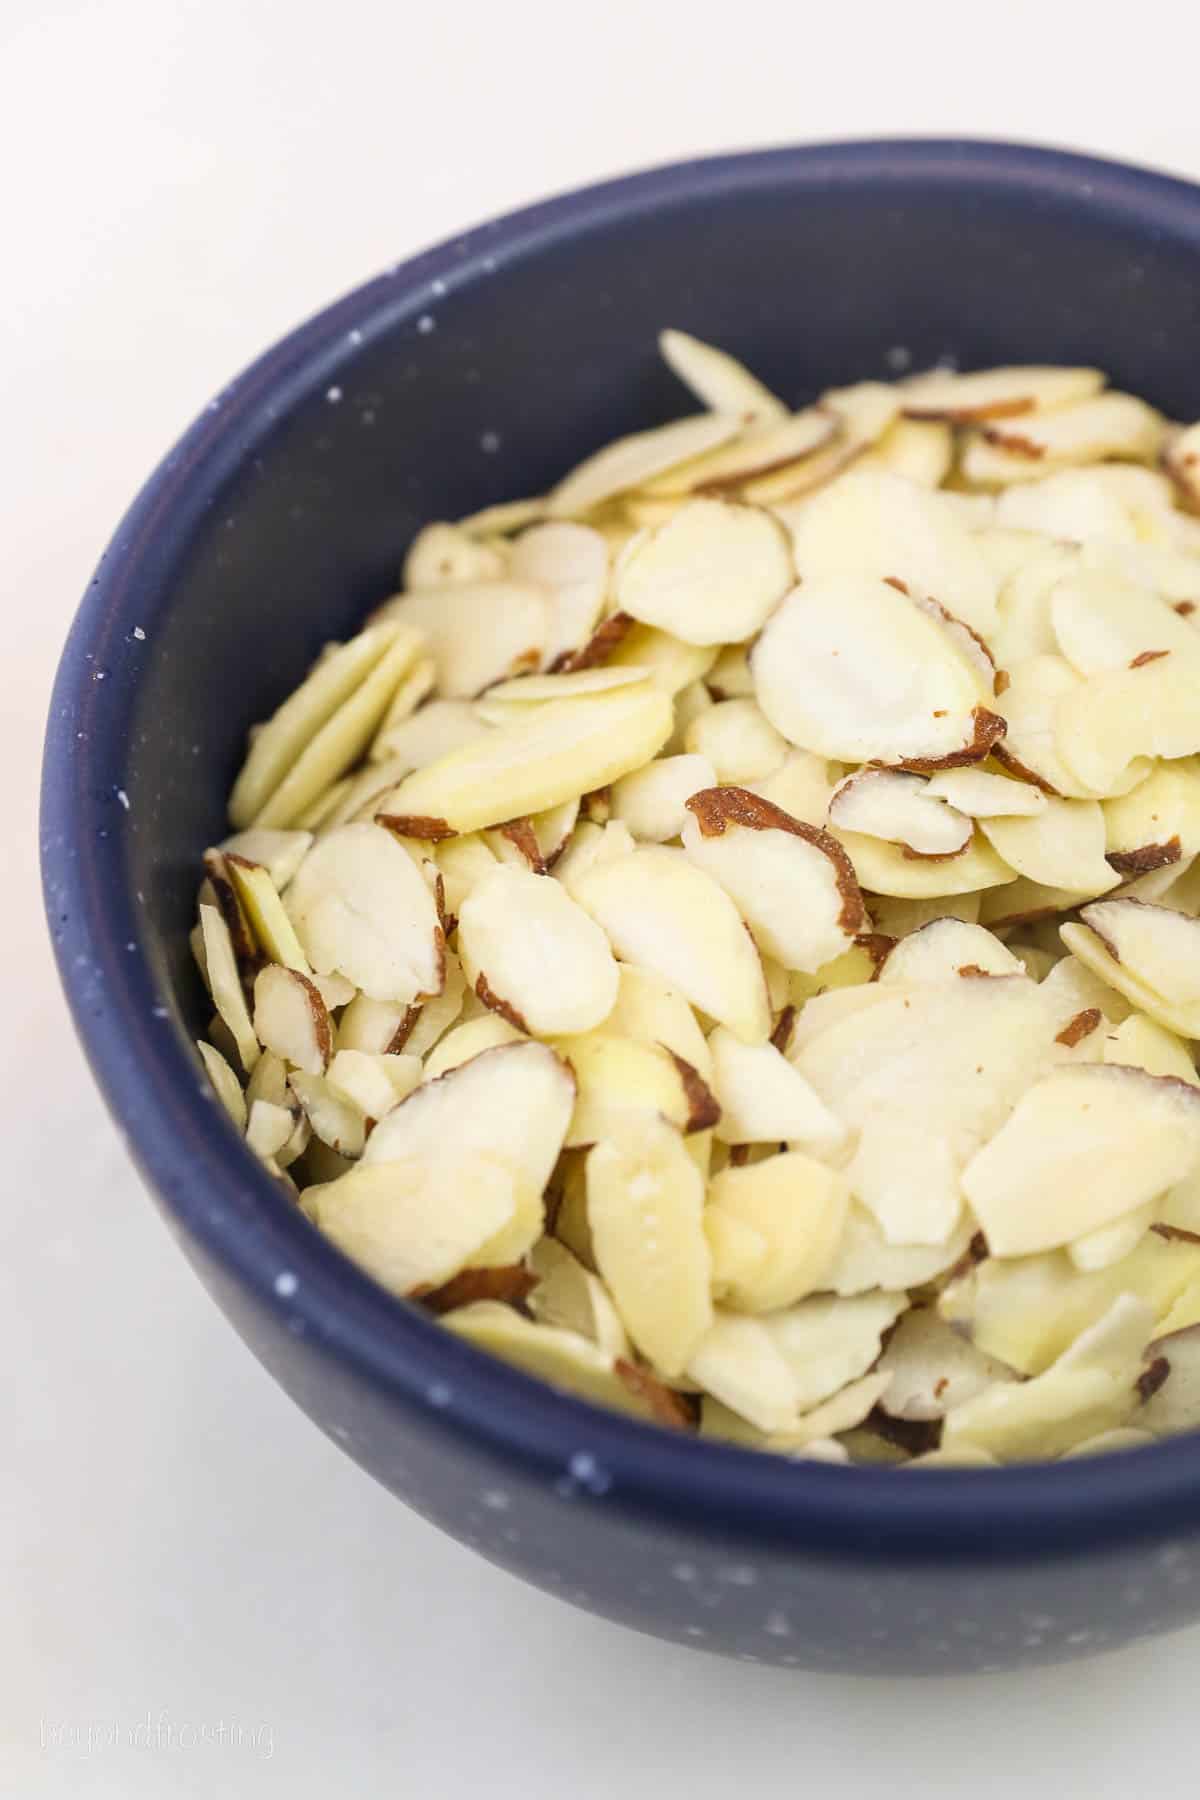 Slivered almonds in a blue bowl.